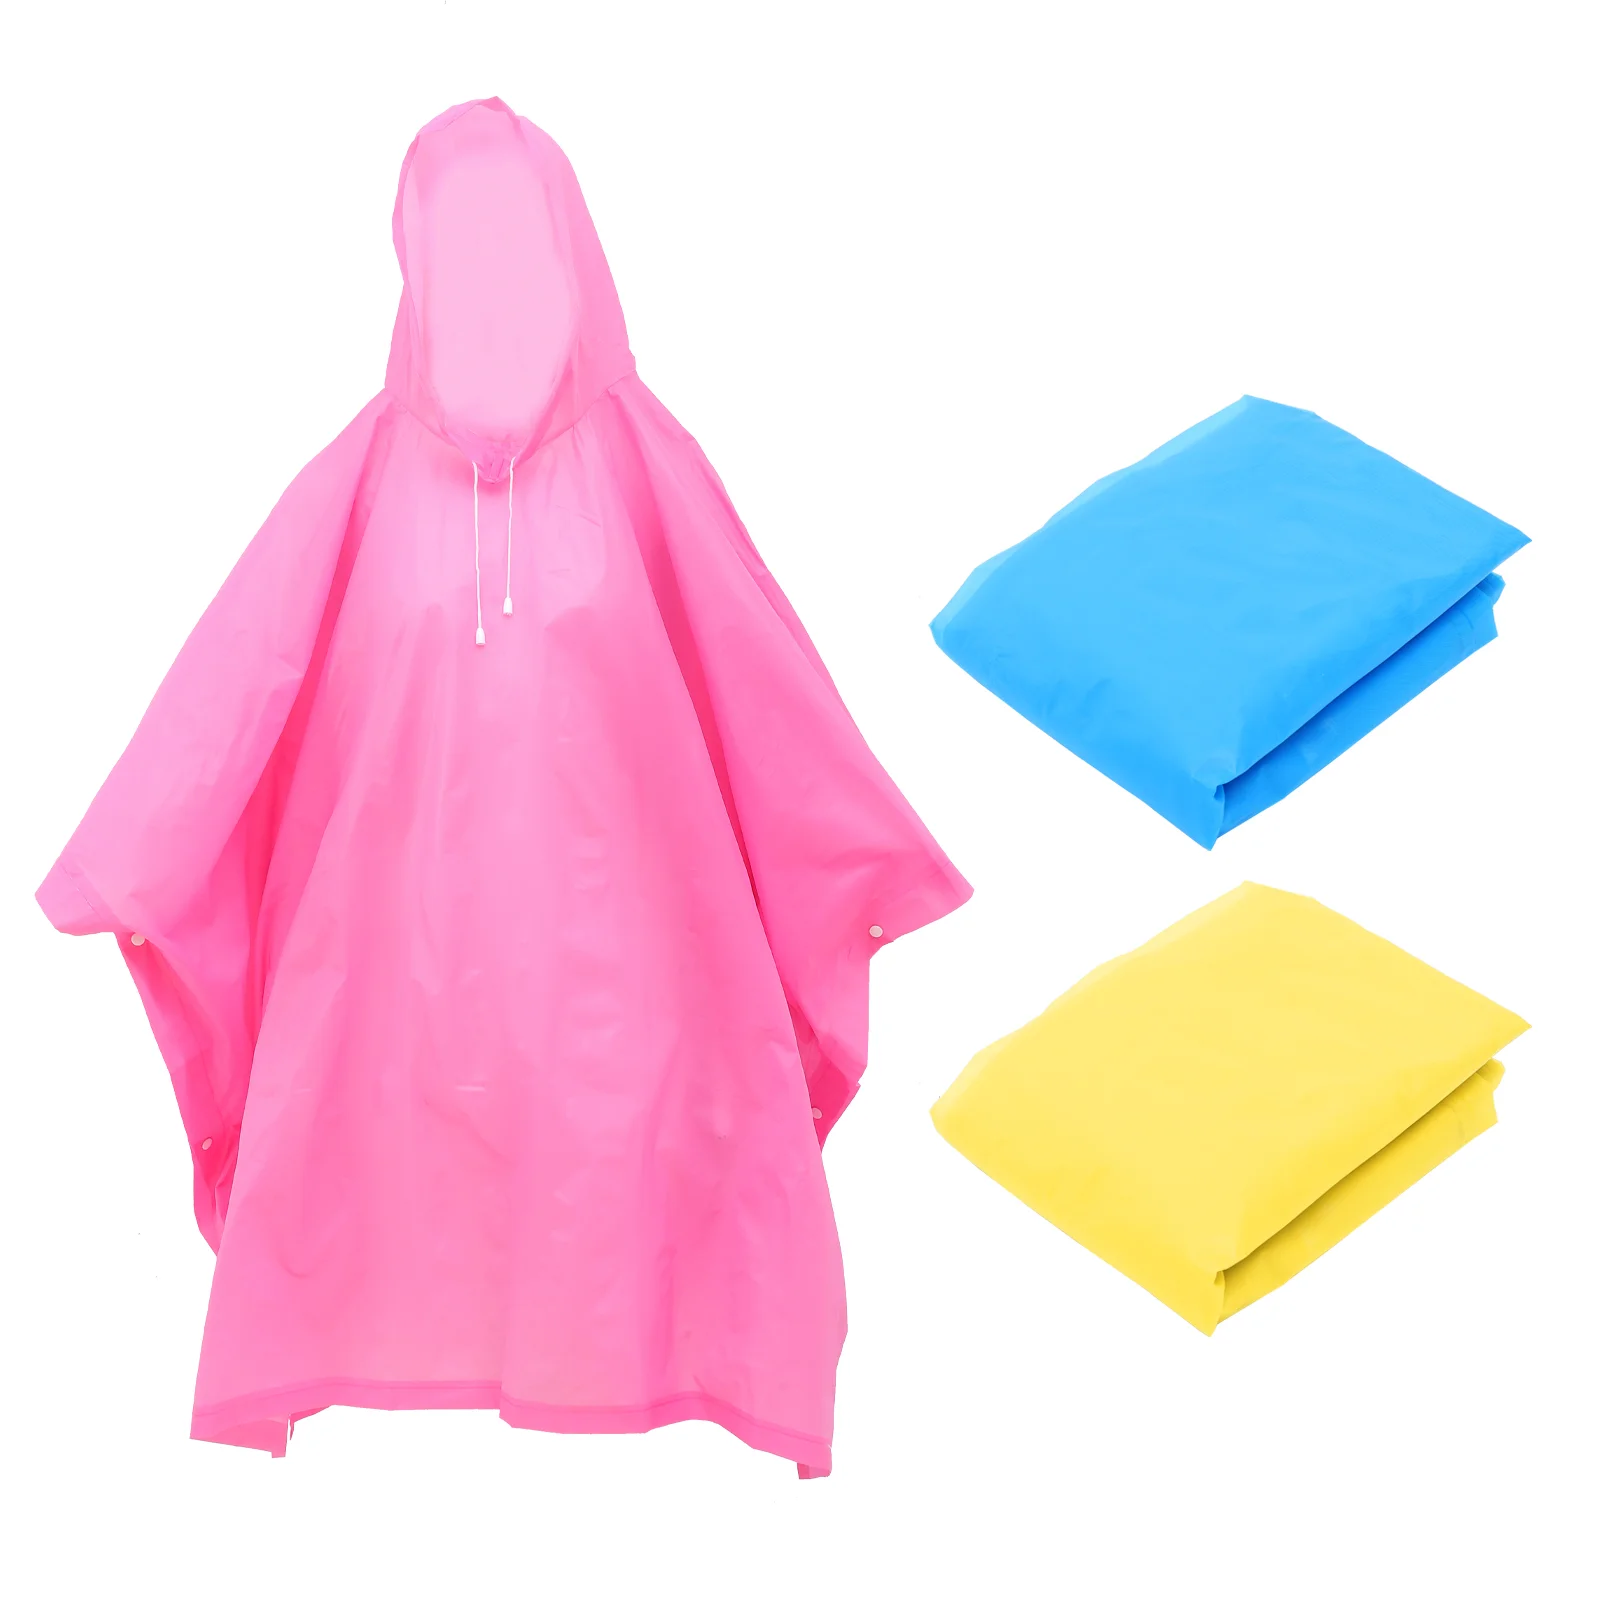 

Poncho Hiking Rain Ponchos Portable Raincoat Adults Sleeved Bright Color Coats Colored Raincoats